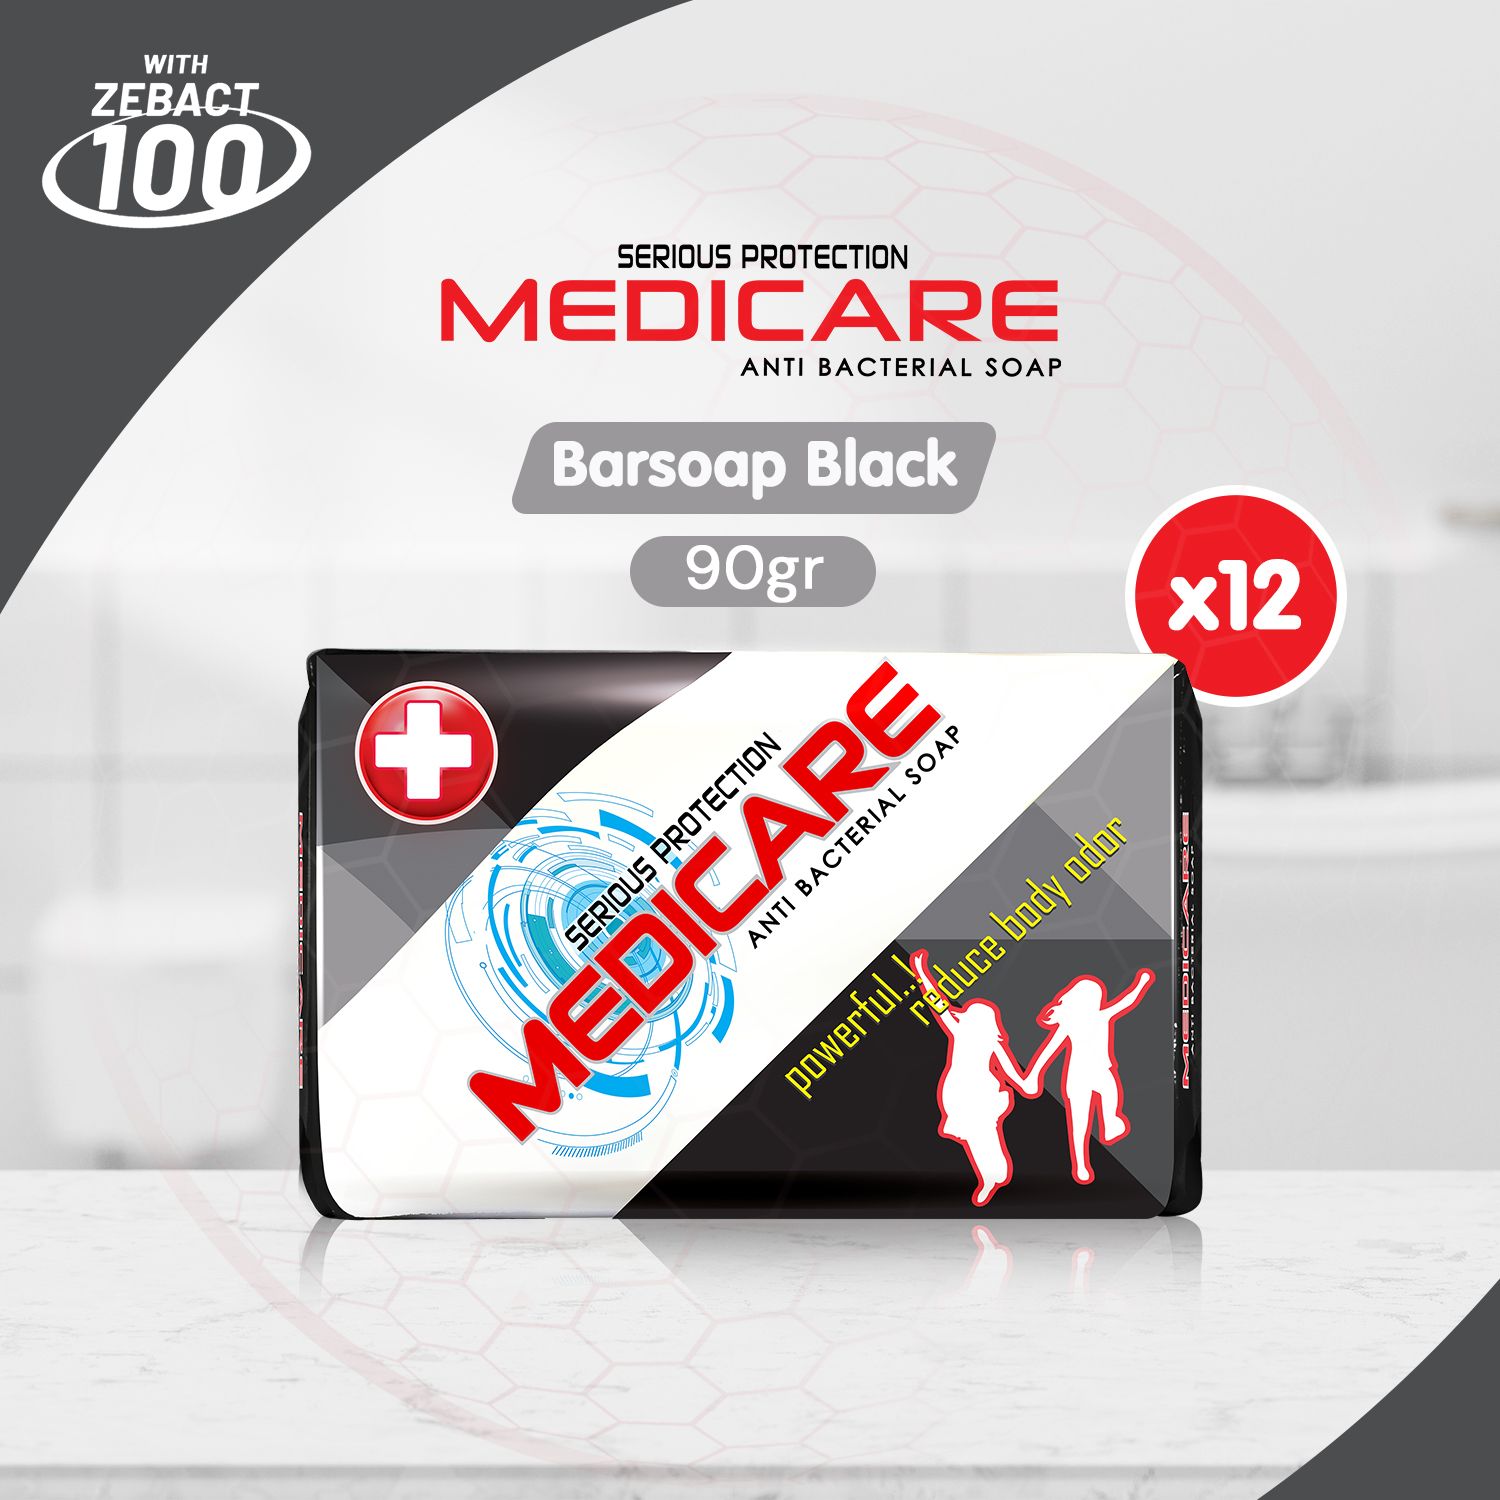 MEDICARE Sabun Antibakteri Black 90g (12 pcs) - 1